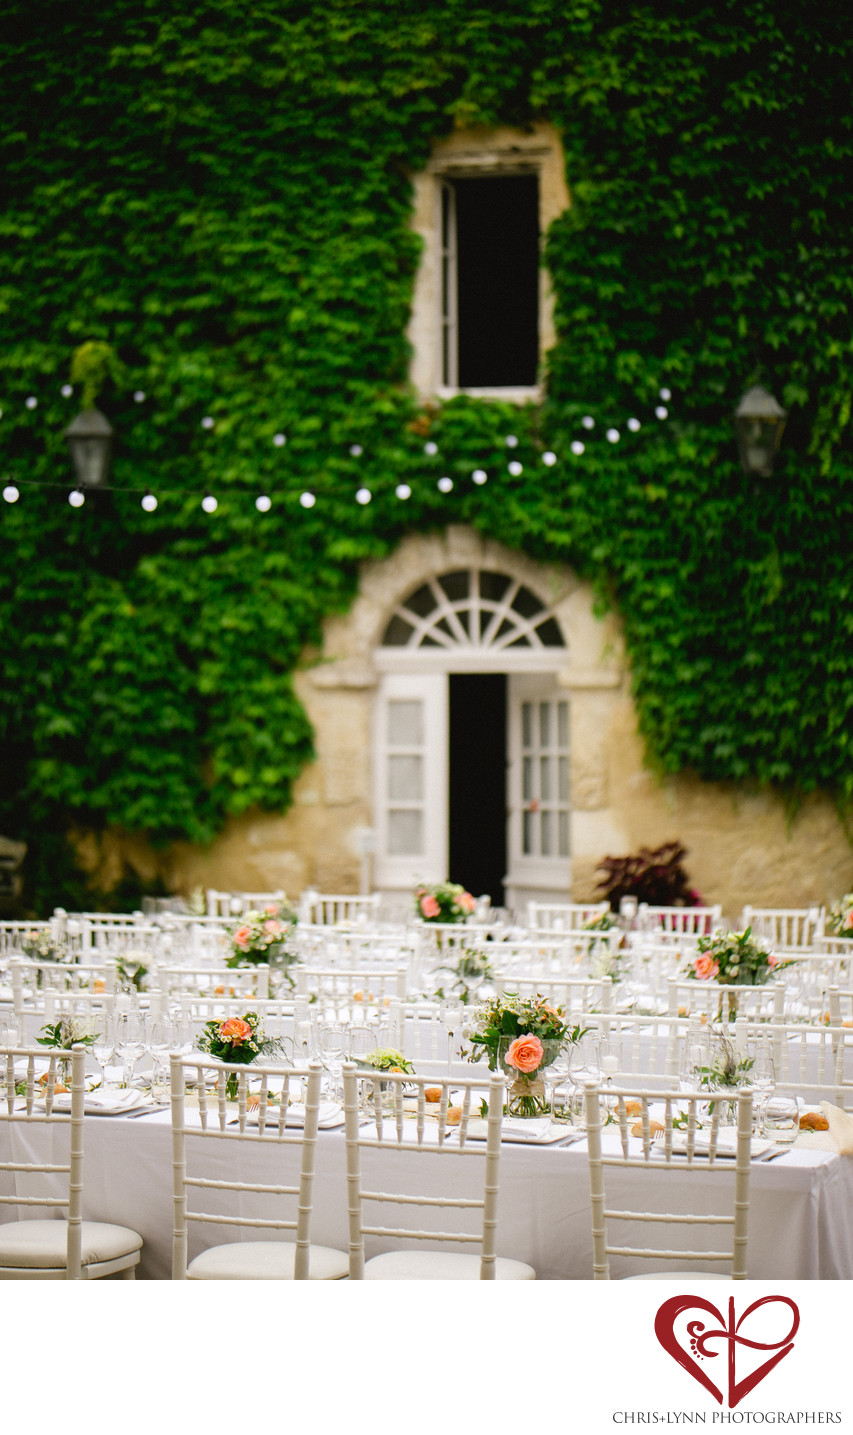 France Chateau Weddings, Decor Picture